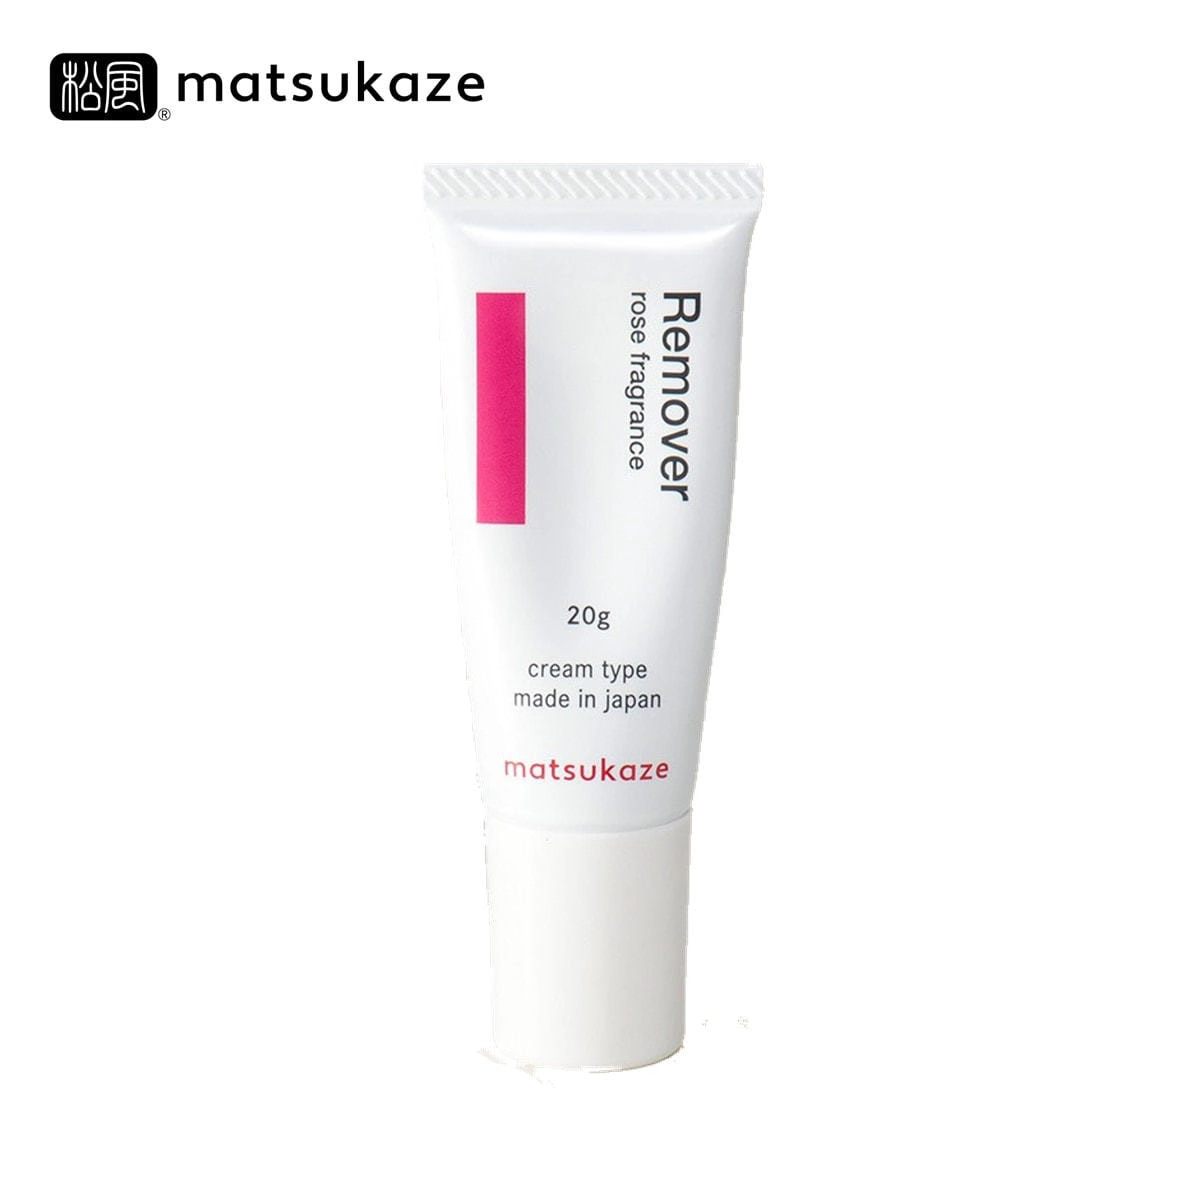 【Matsukaze】Cream remover Rose Fragrance 20g